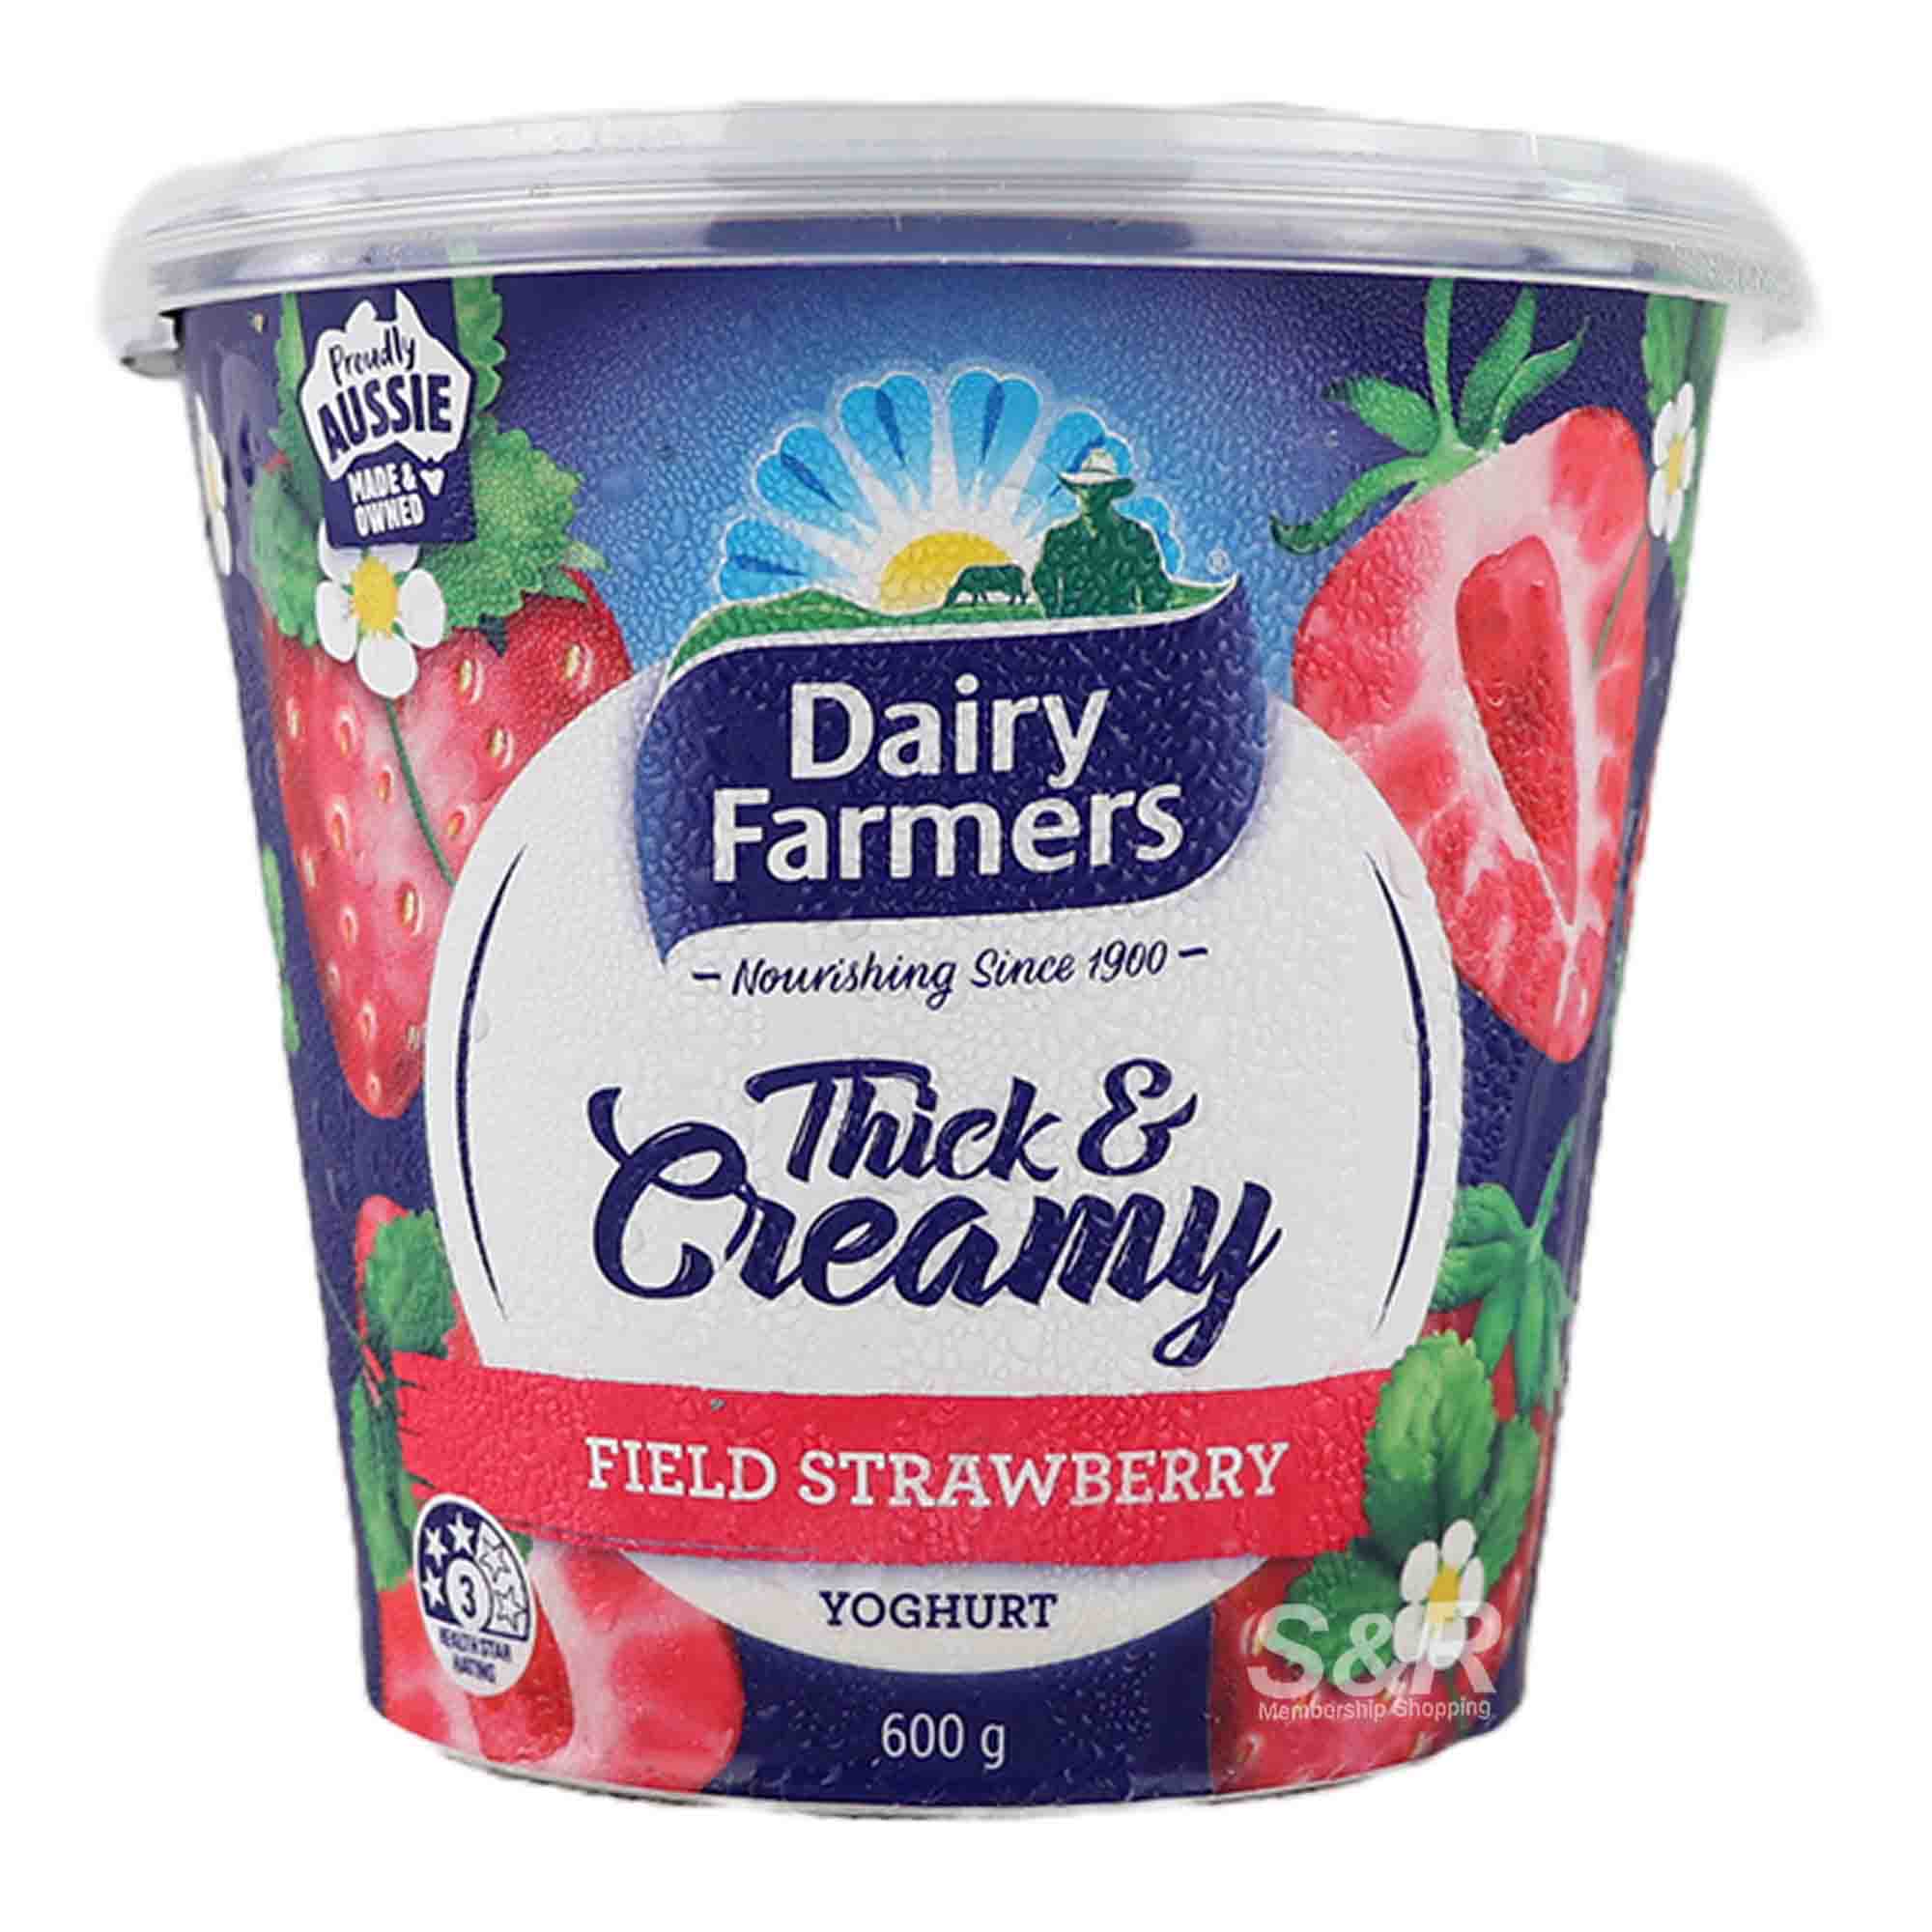 Dairy Farmers Thick & Creamy Field Strawberry Yoghurt 600g